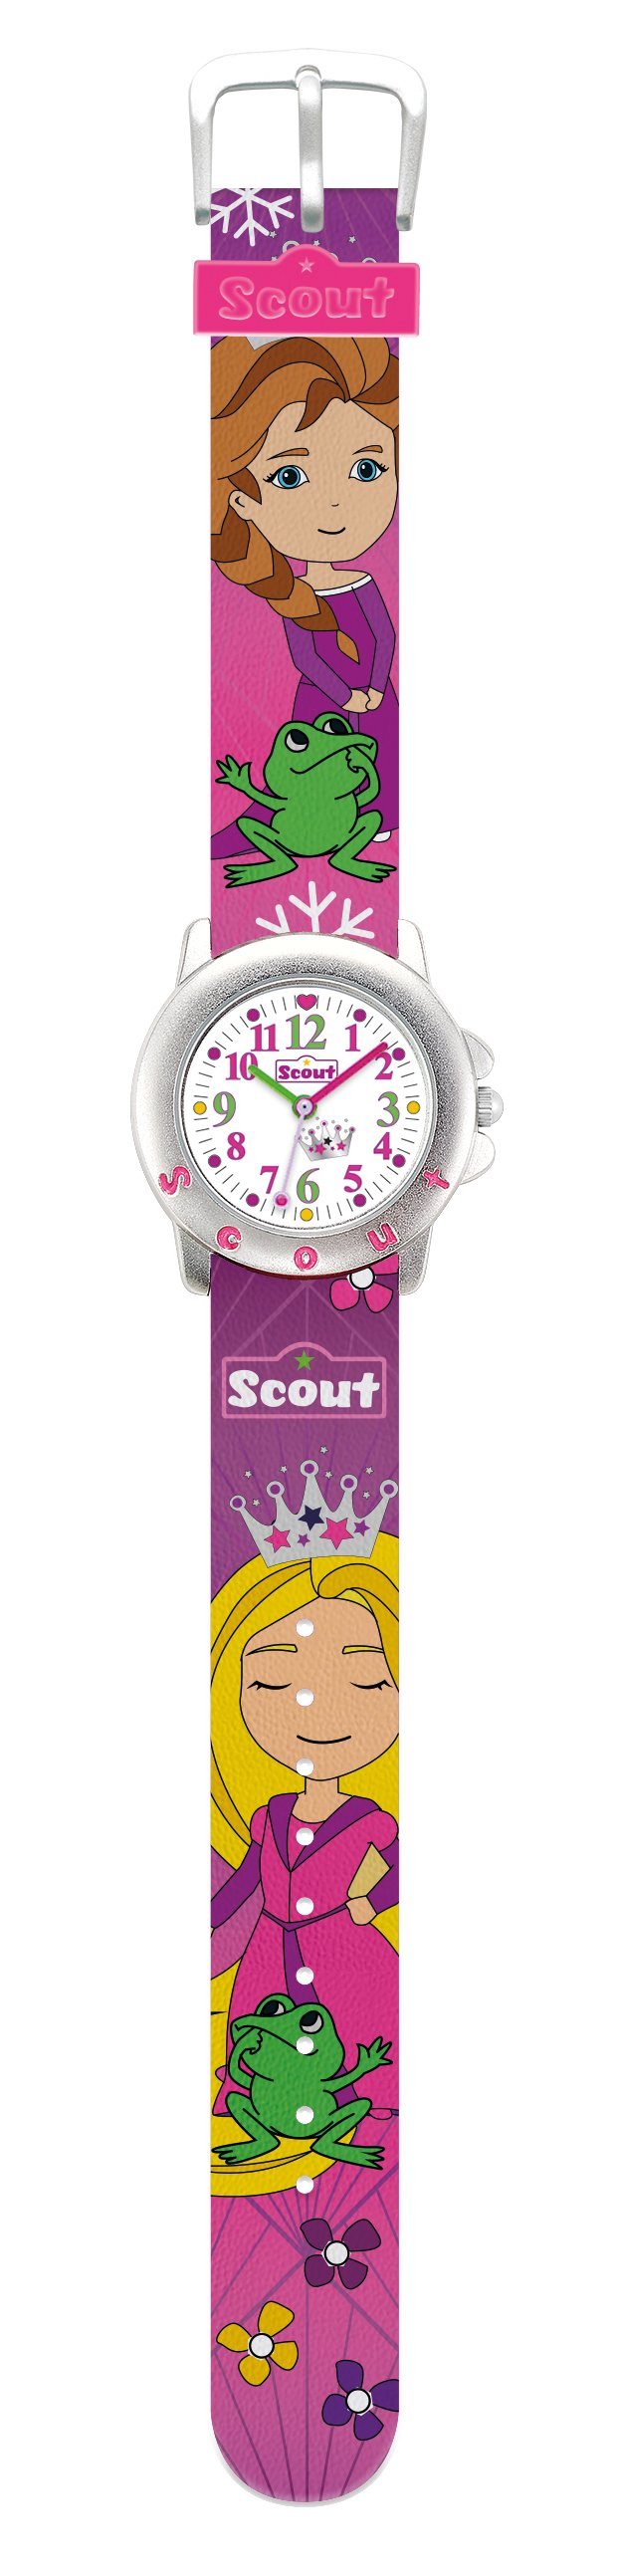 Scout Quarzuhr Kinder Armbanduhr Star Kids Prinzessinen 280393037